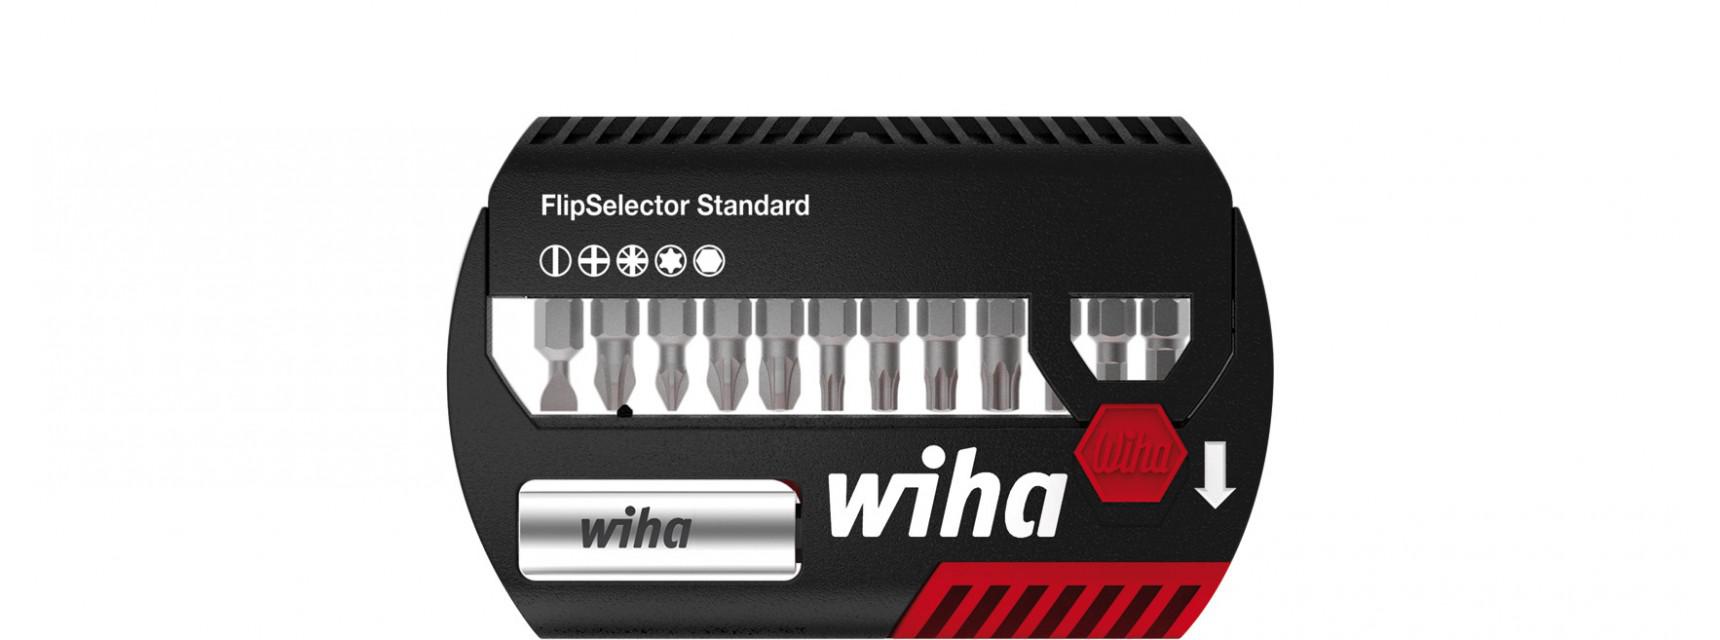 Набор бит FlipSelector Standard 25 мм 7947-995 WIHA 39045